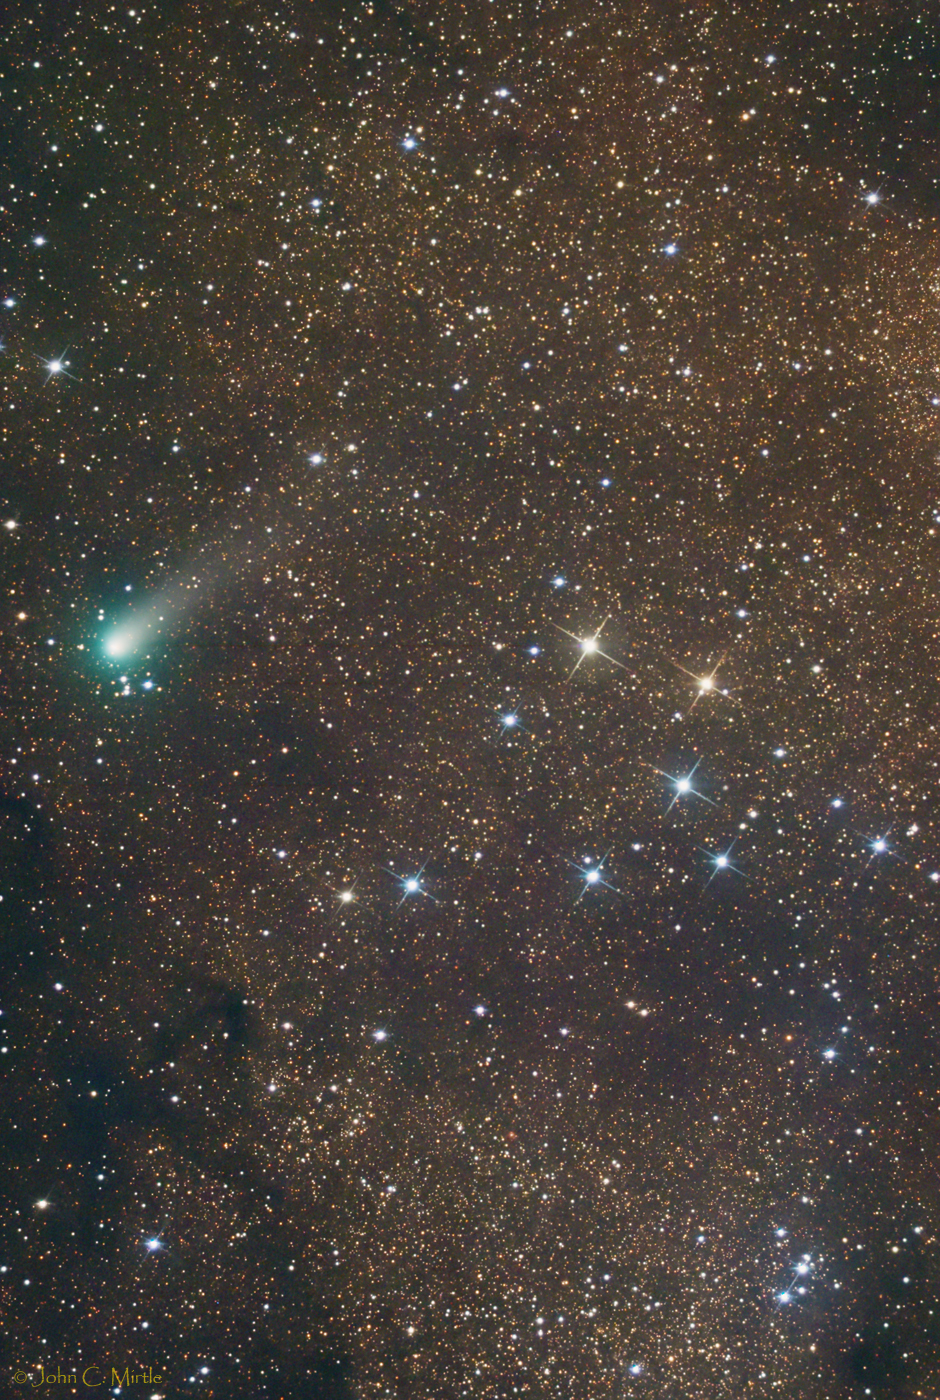 Comet Garradd - C2009-P1 passing the Coathanger Cluster